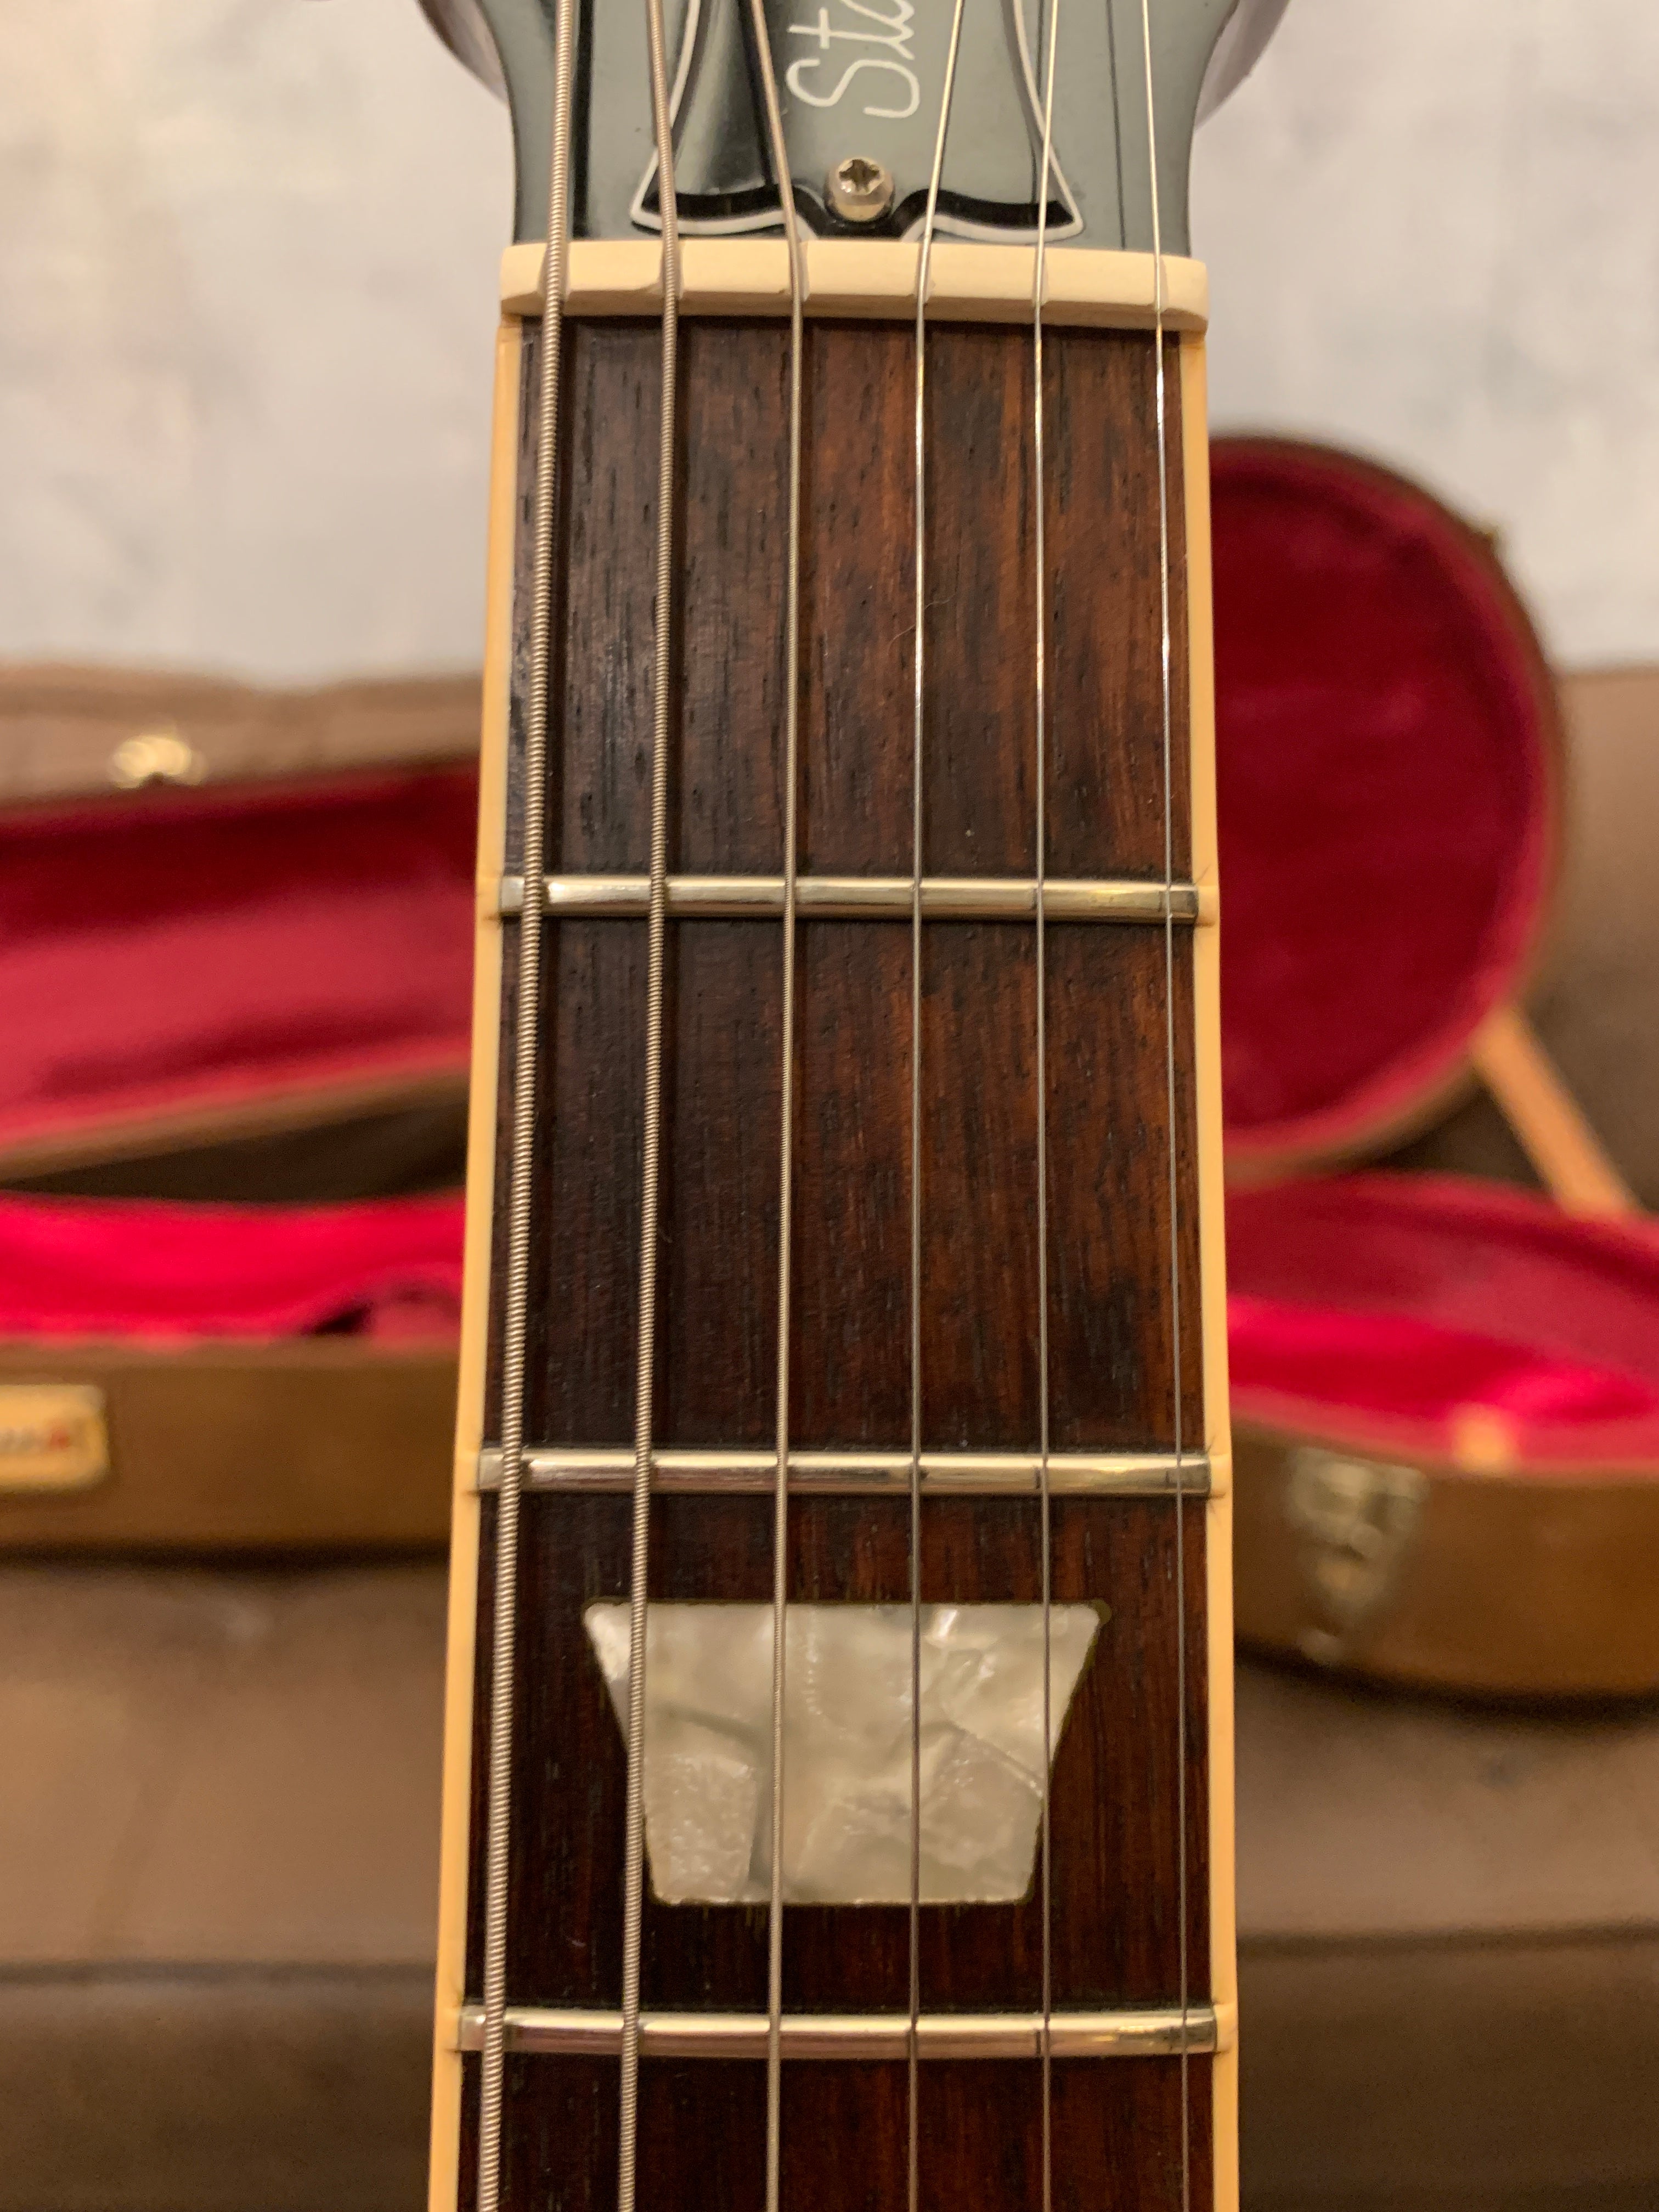 Gibson Les Paul Standard Honey Burst 1998 9.6lb With Original Hard Case